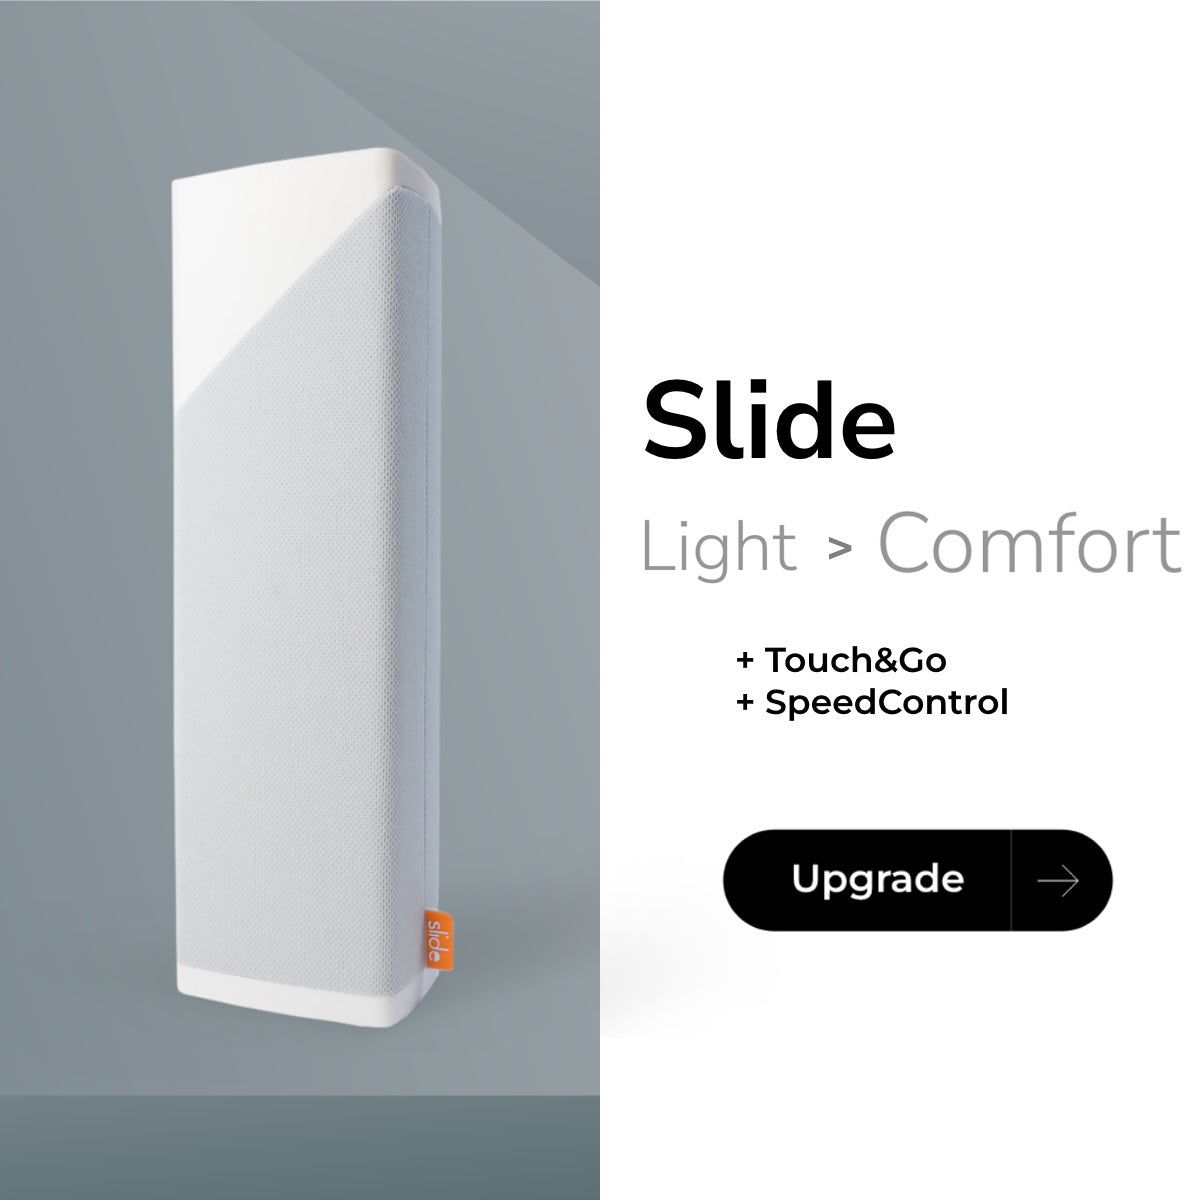 Slide upgrade (Light > Comfort)